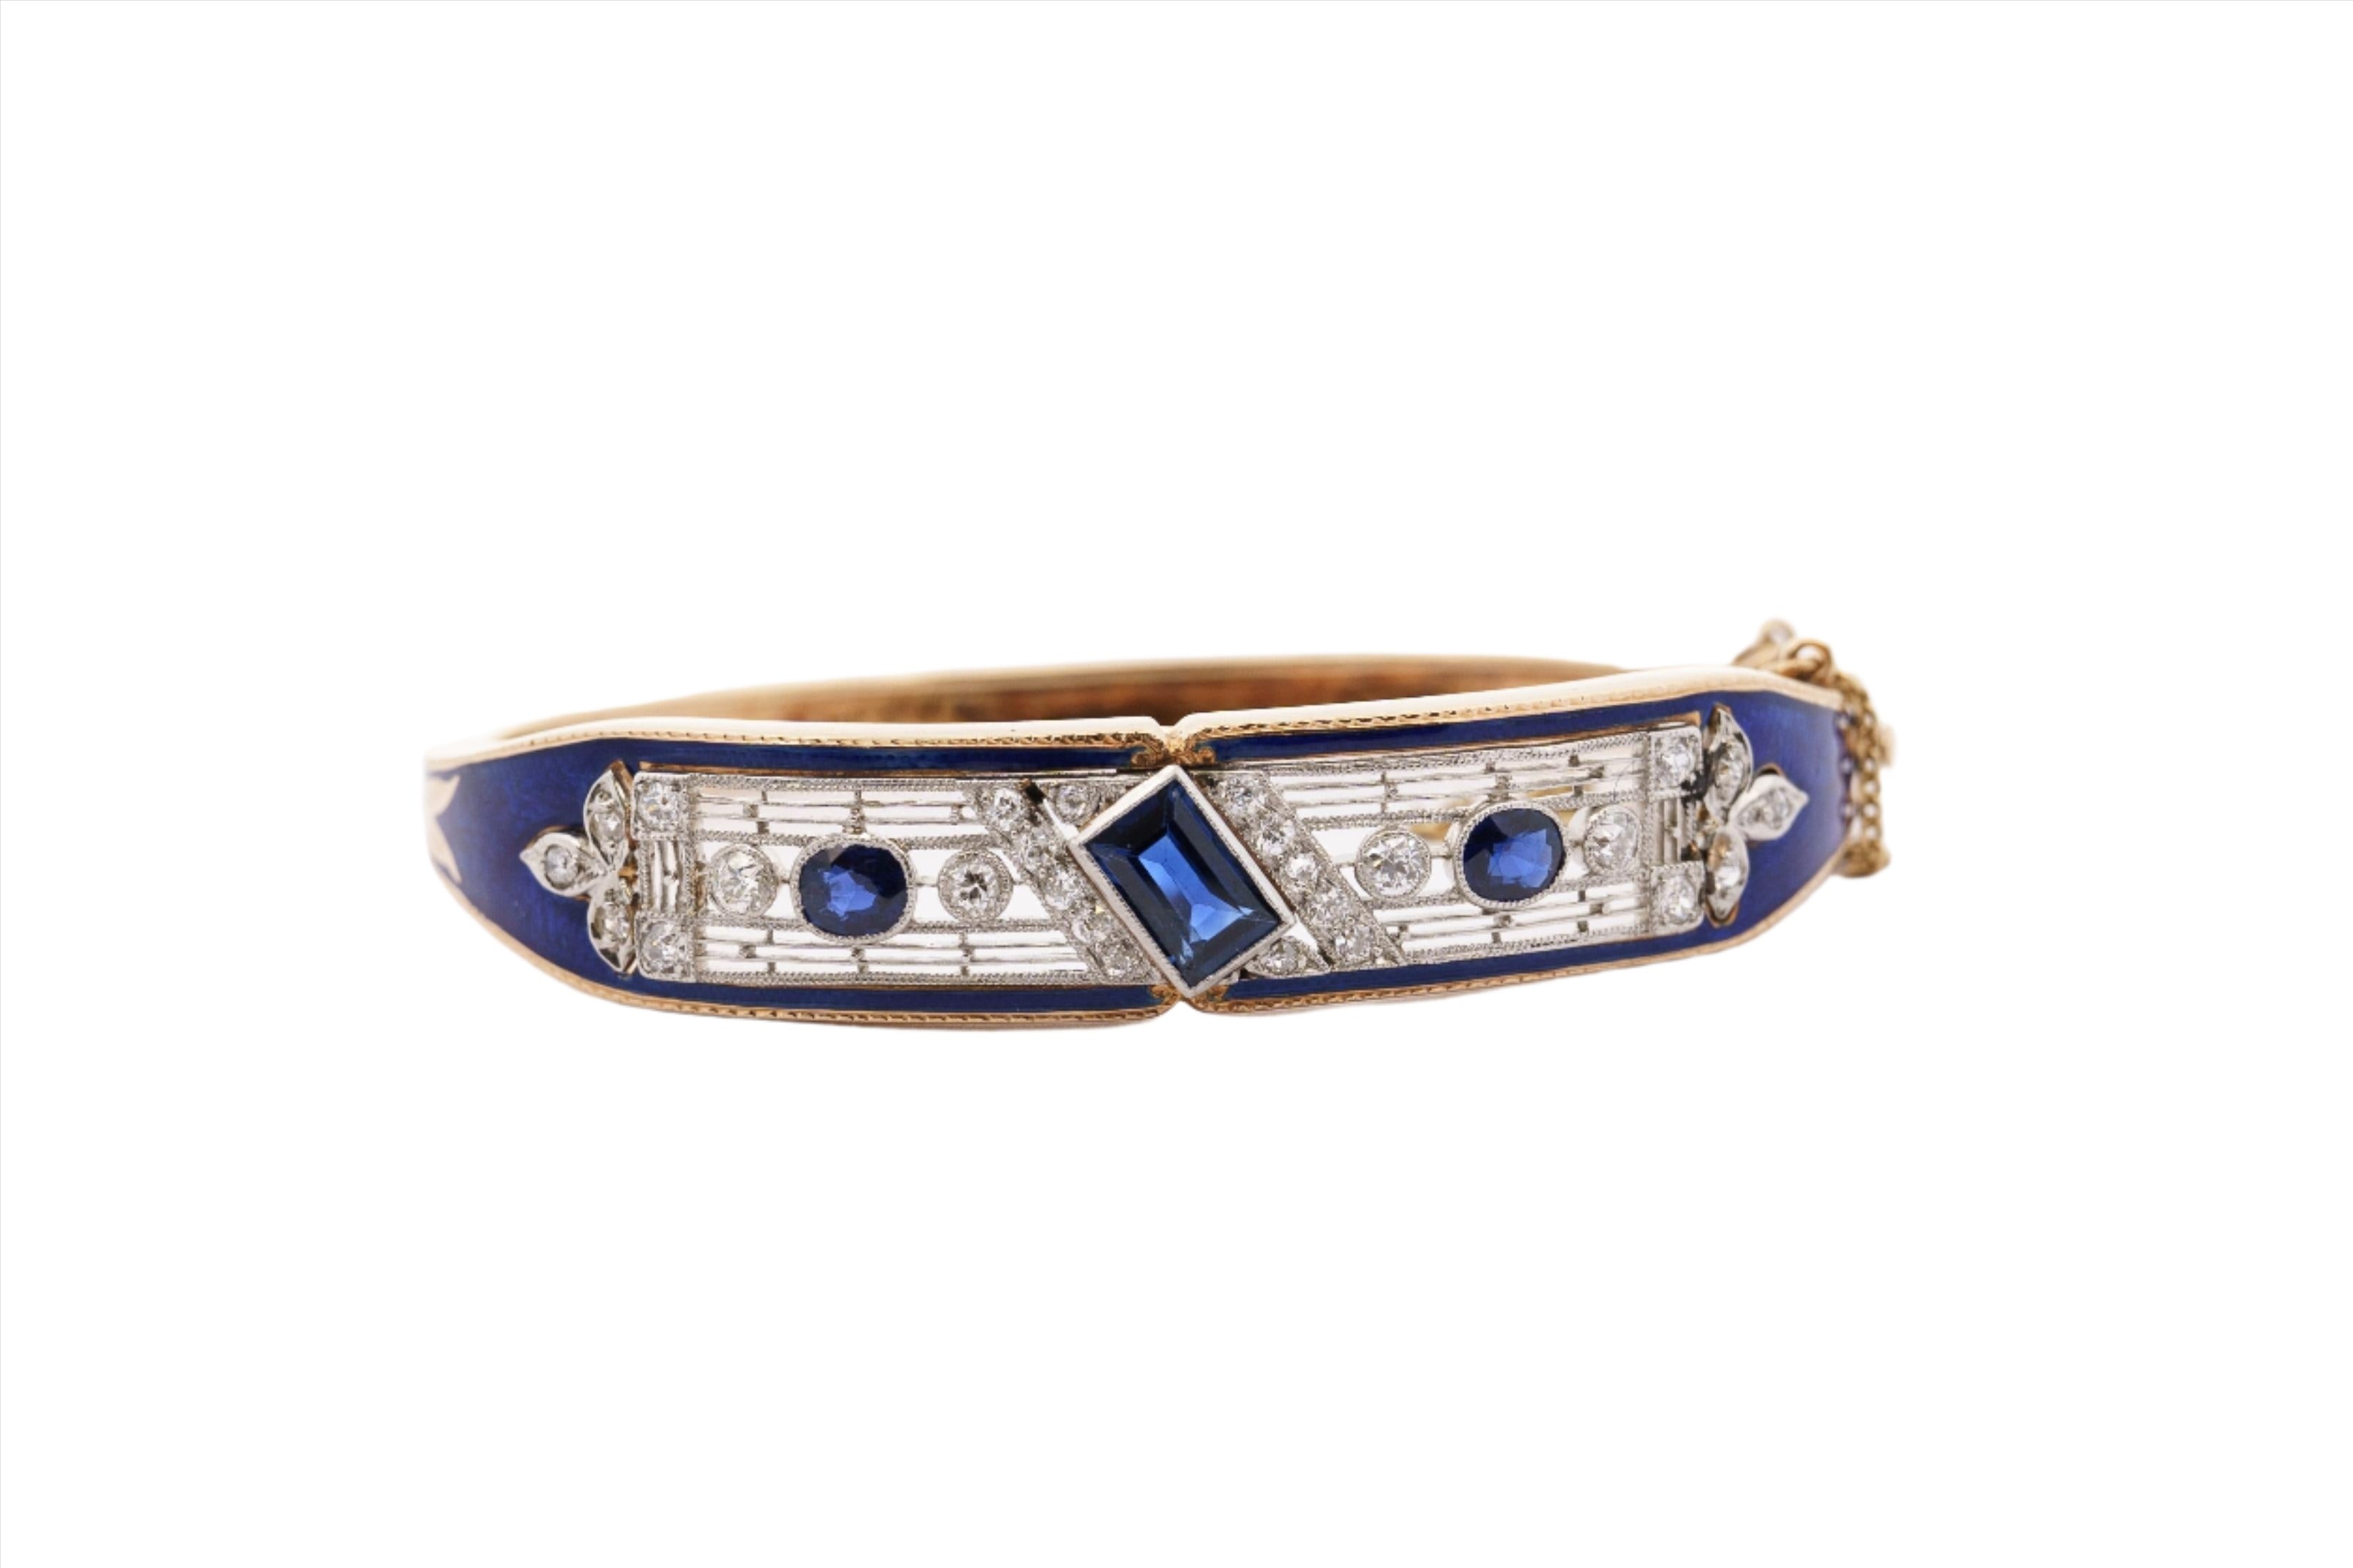 Vintage Art Deco Estate Blue Sapphire, Diamond & Enamel Bangle Bracelet